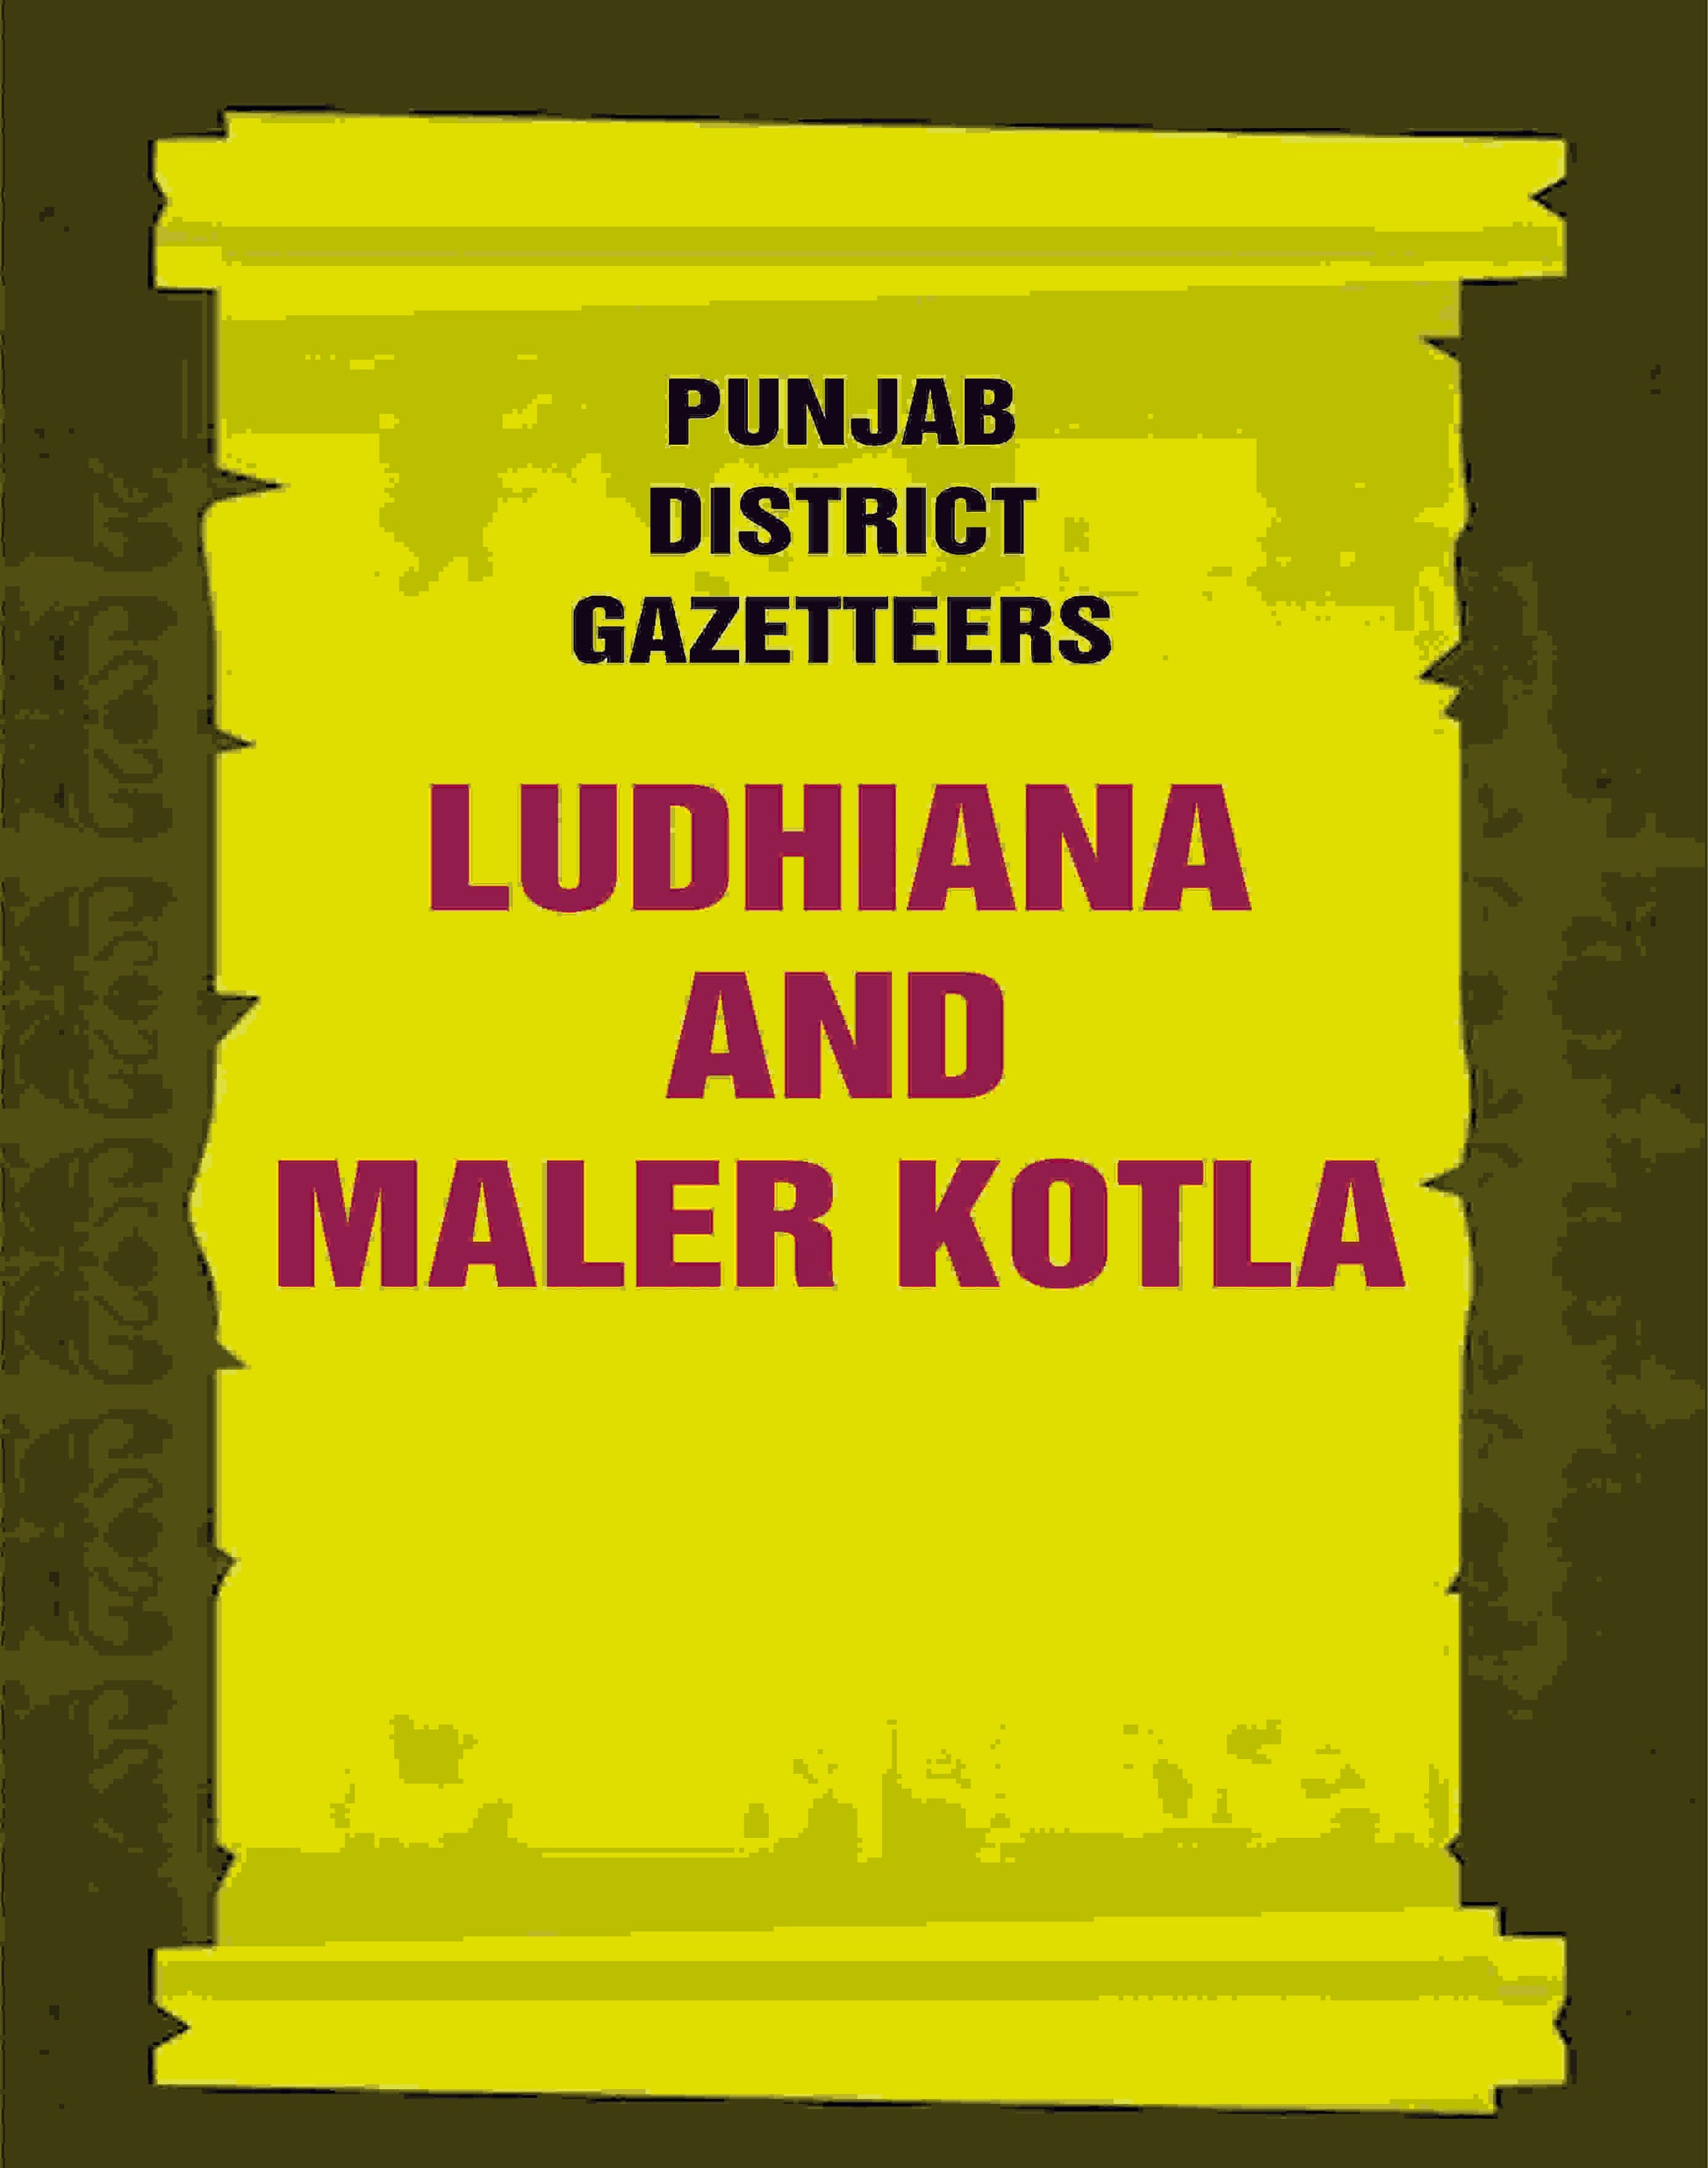 Punjab District Gazetteers: Ludhiana and Maler Kotla